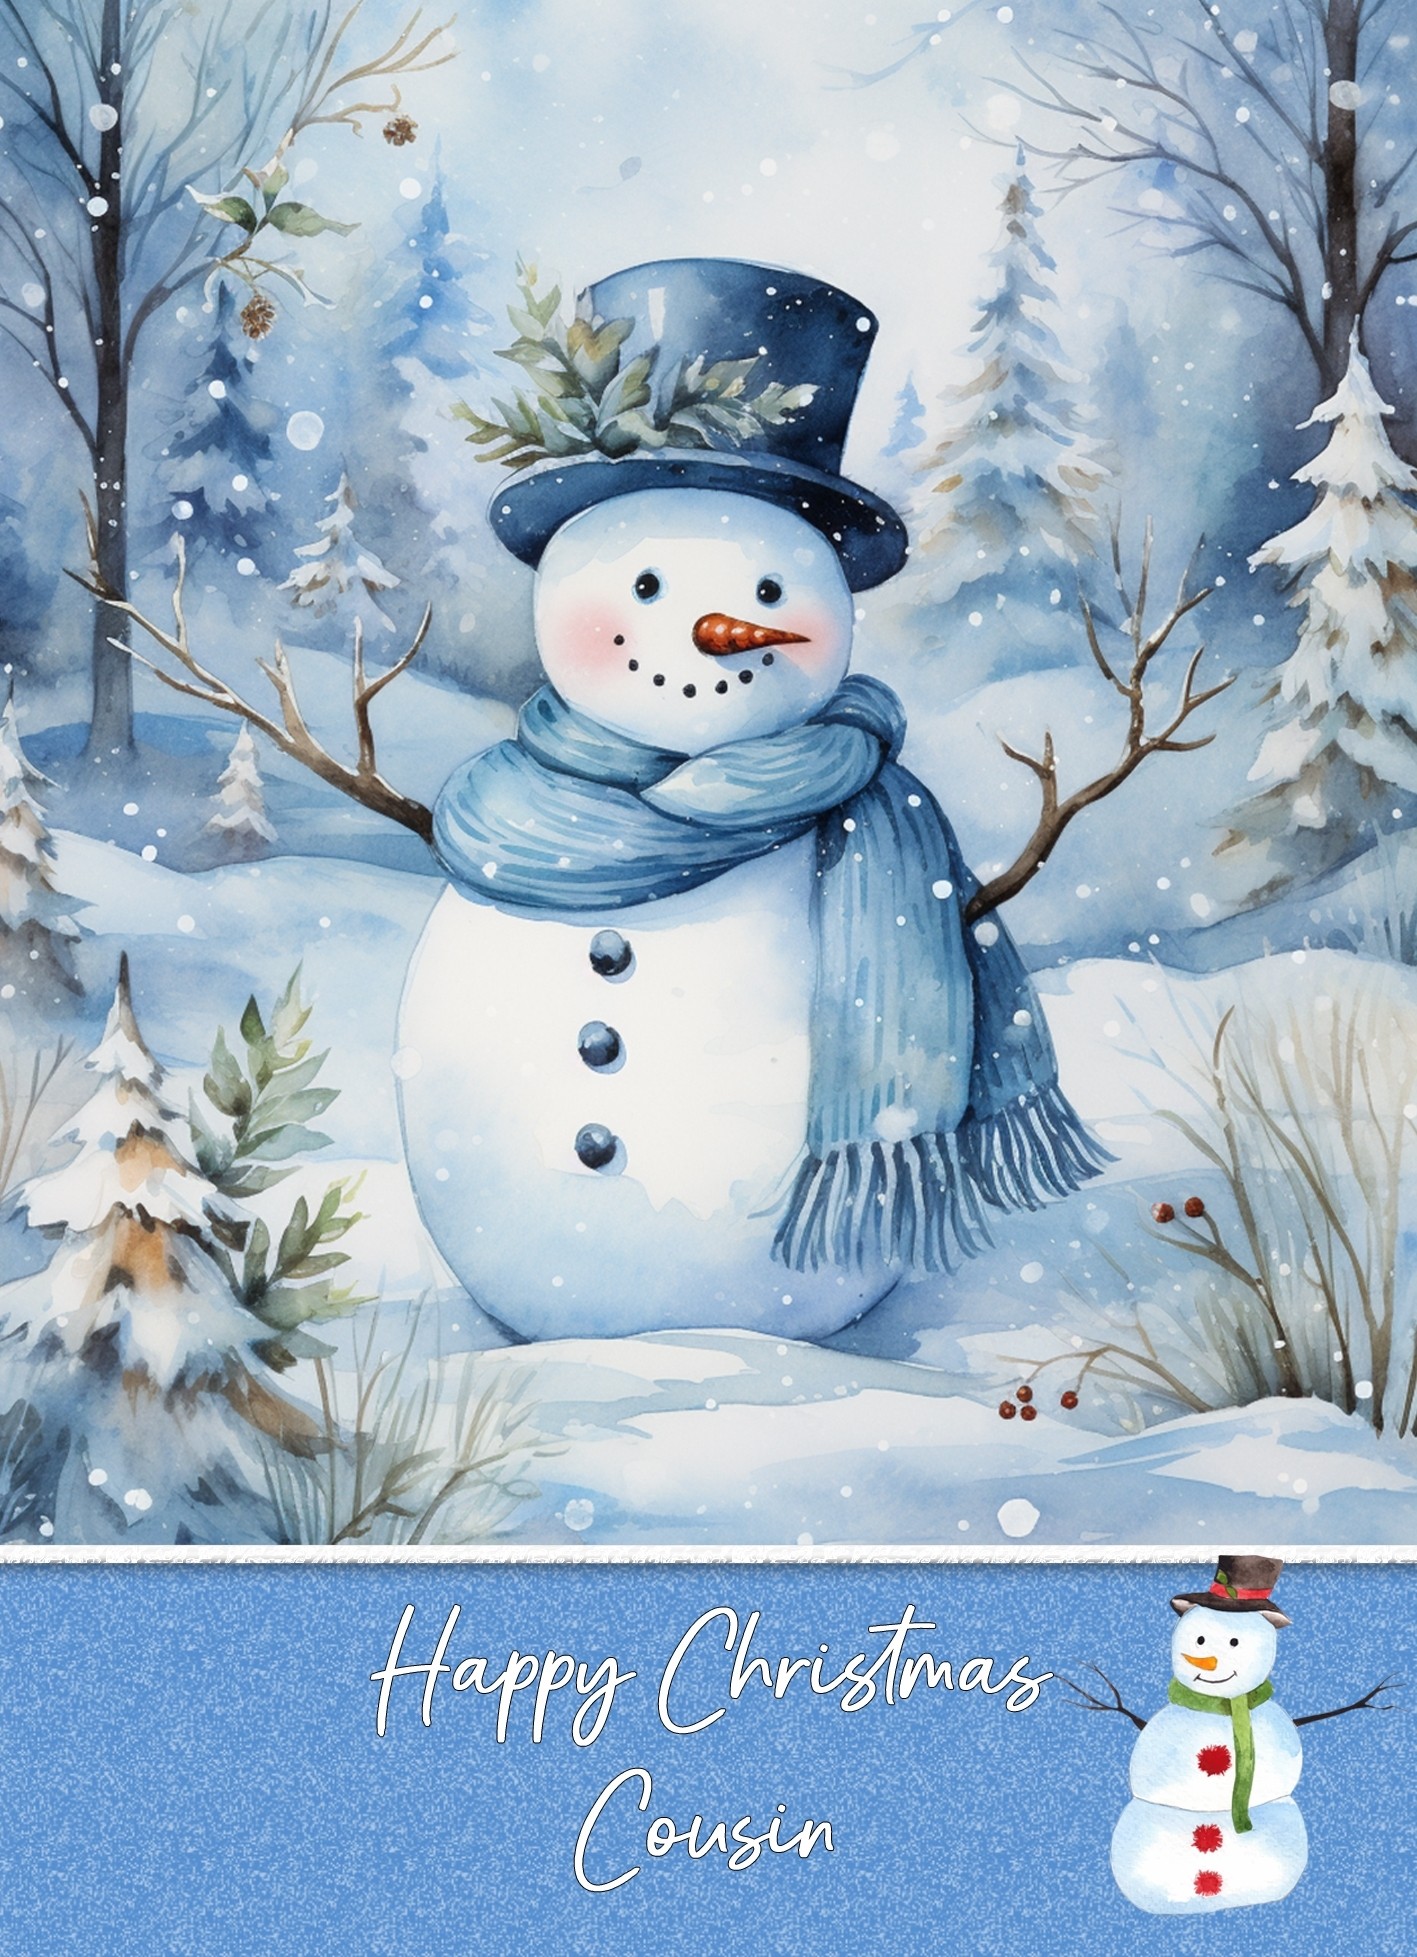 Christmas Card For Cousin (Snowman, Design 8)